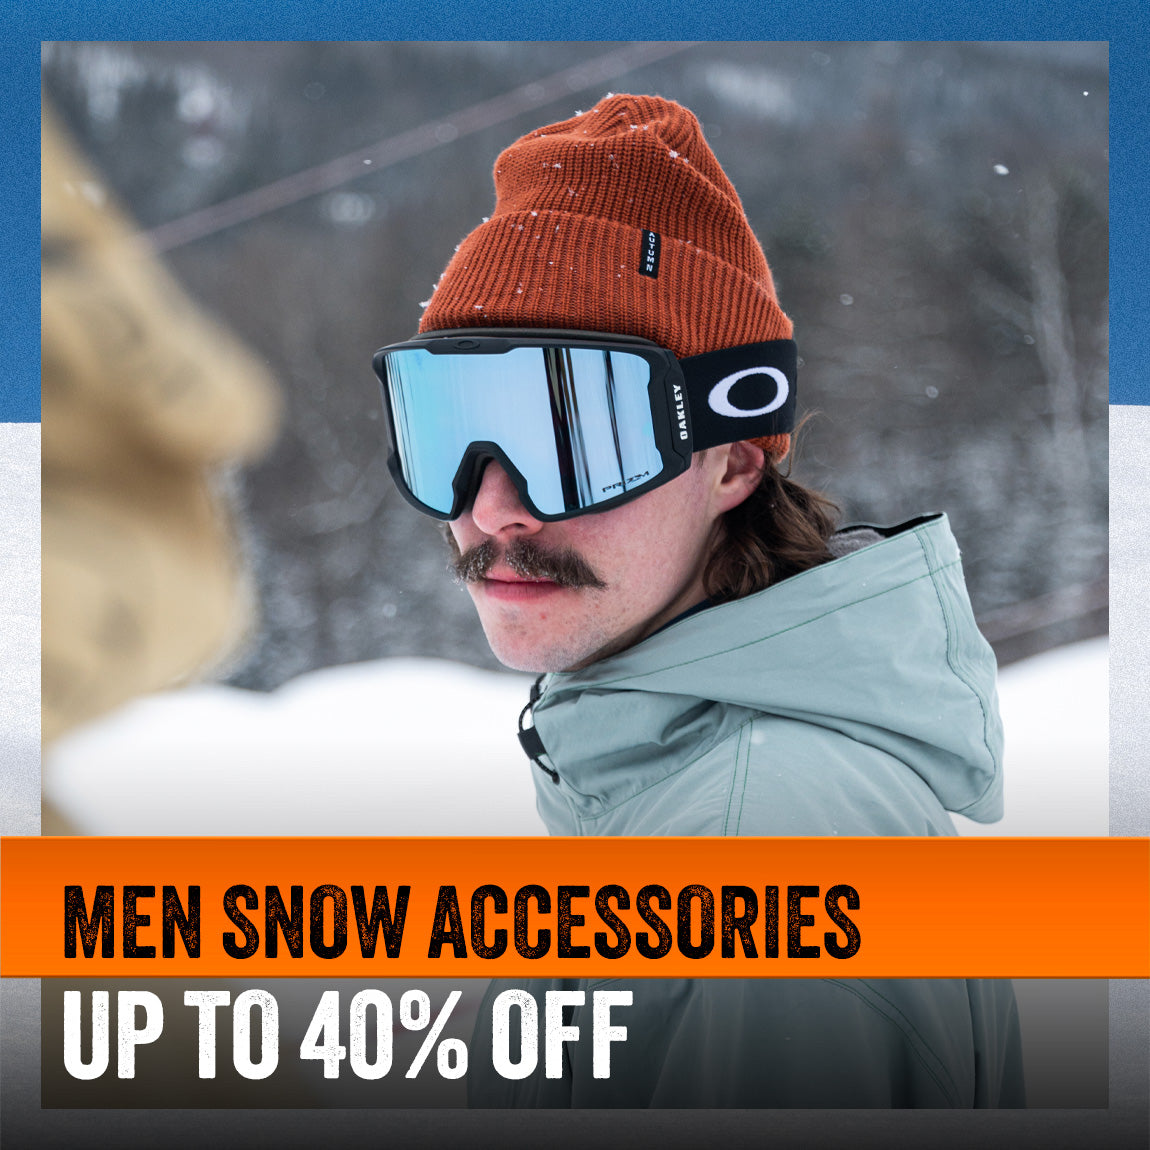 MEN SNOWBOARD ACCESSORIES